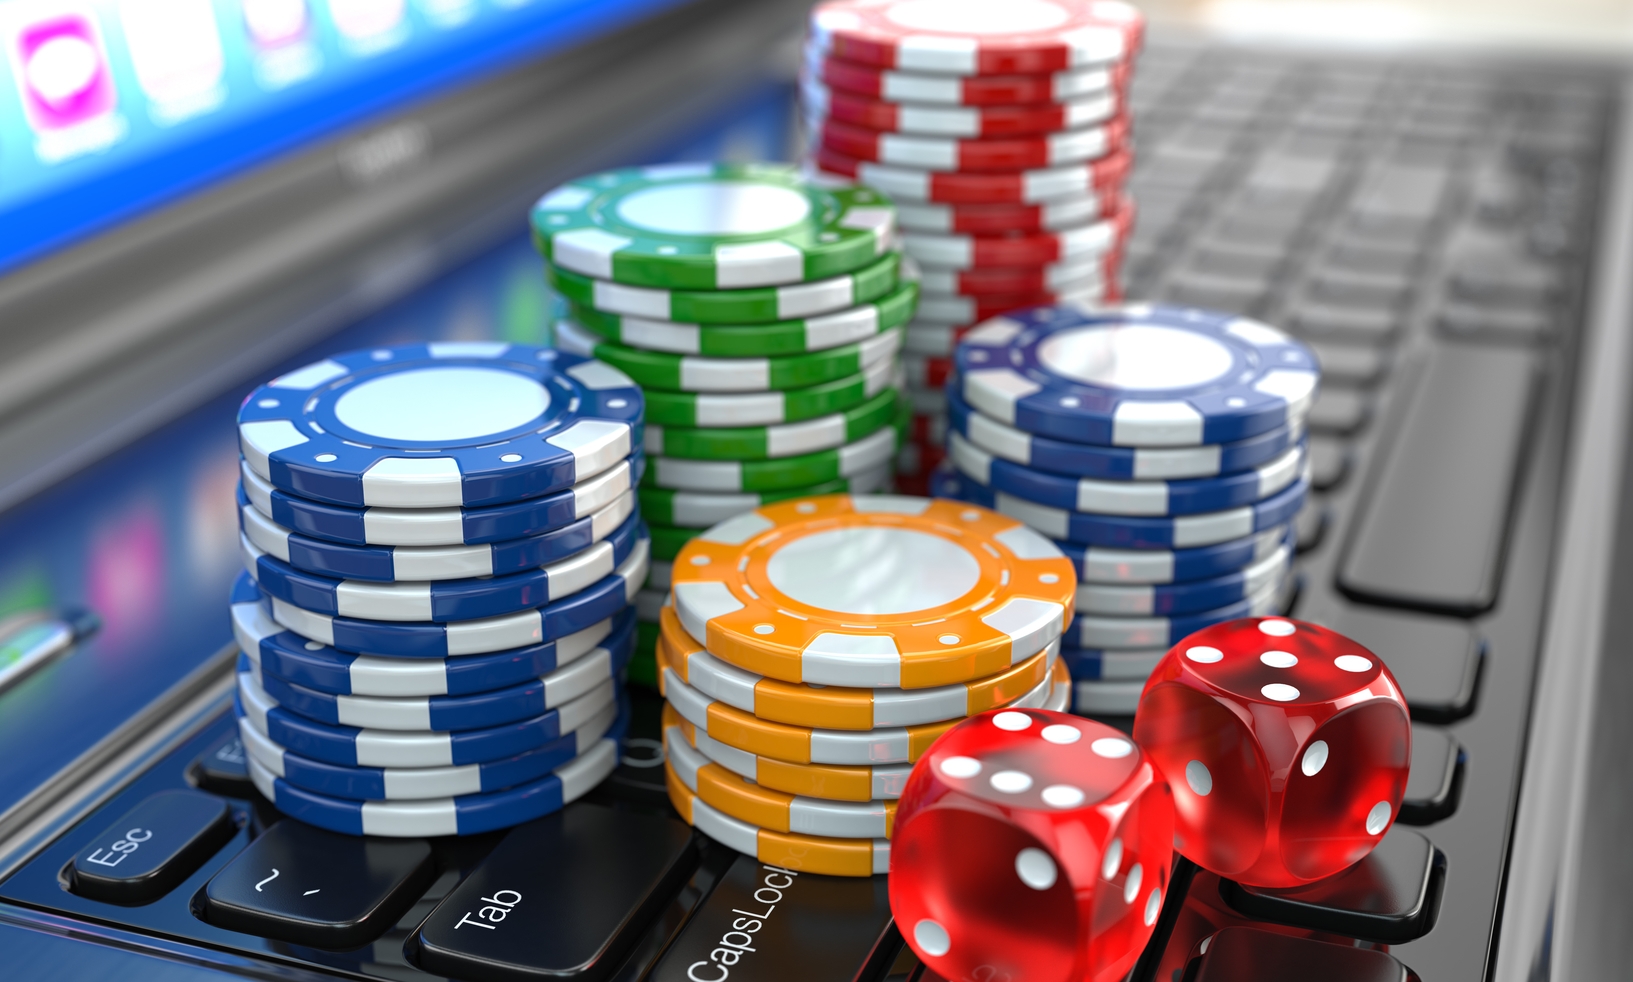 top10 offers revshare gambling betting 3snet